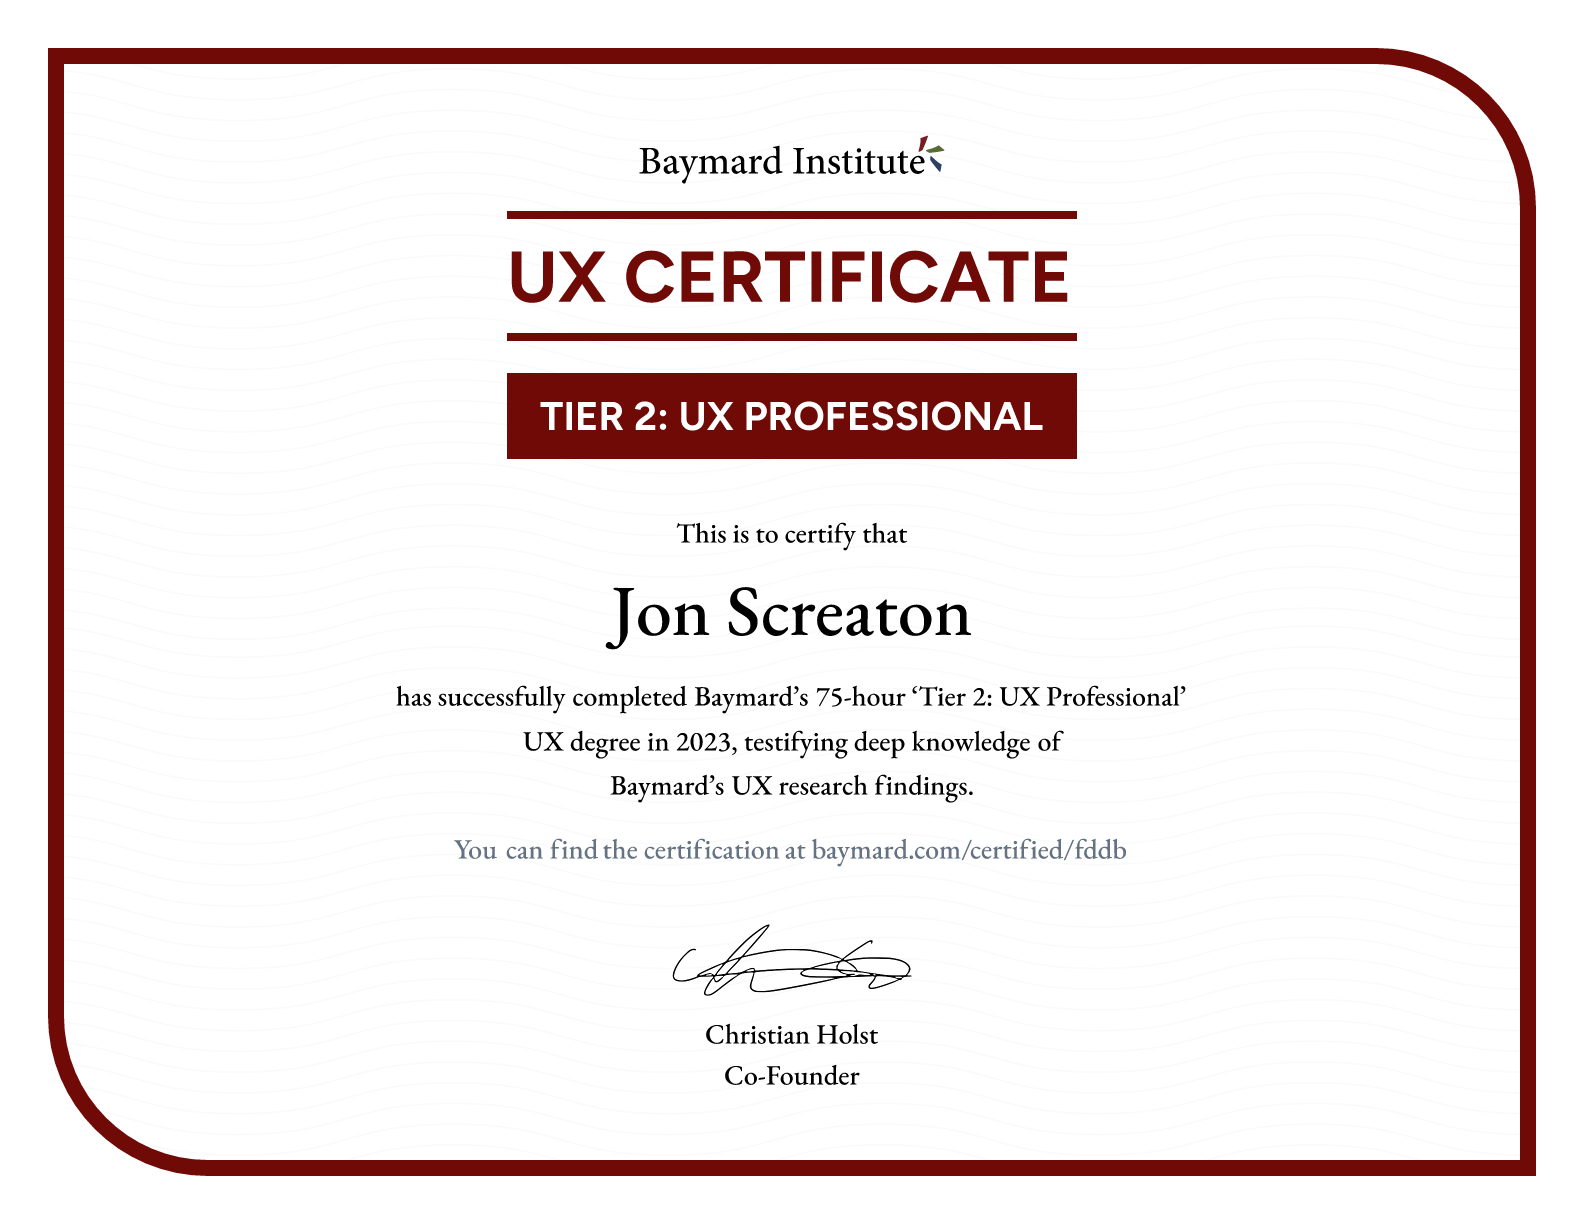 Jon Screaton’s certificate